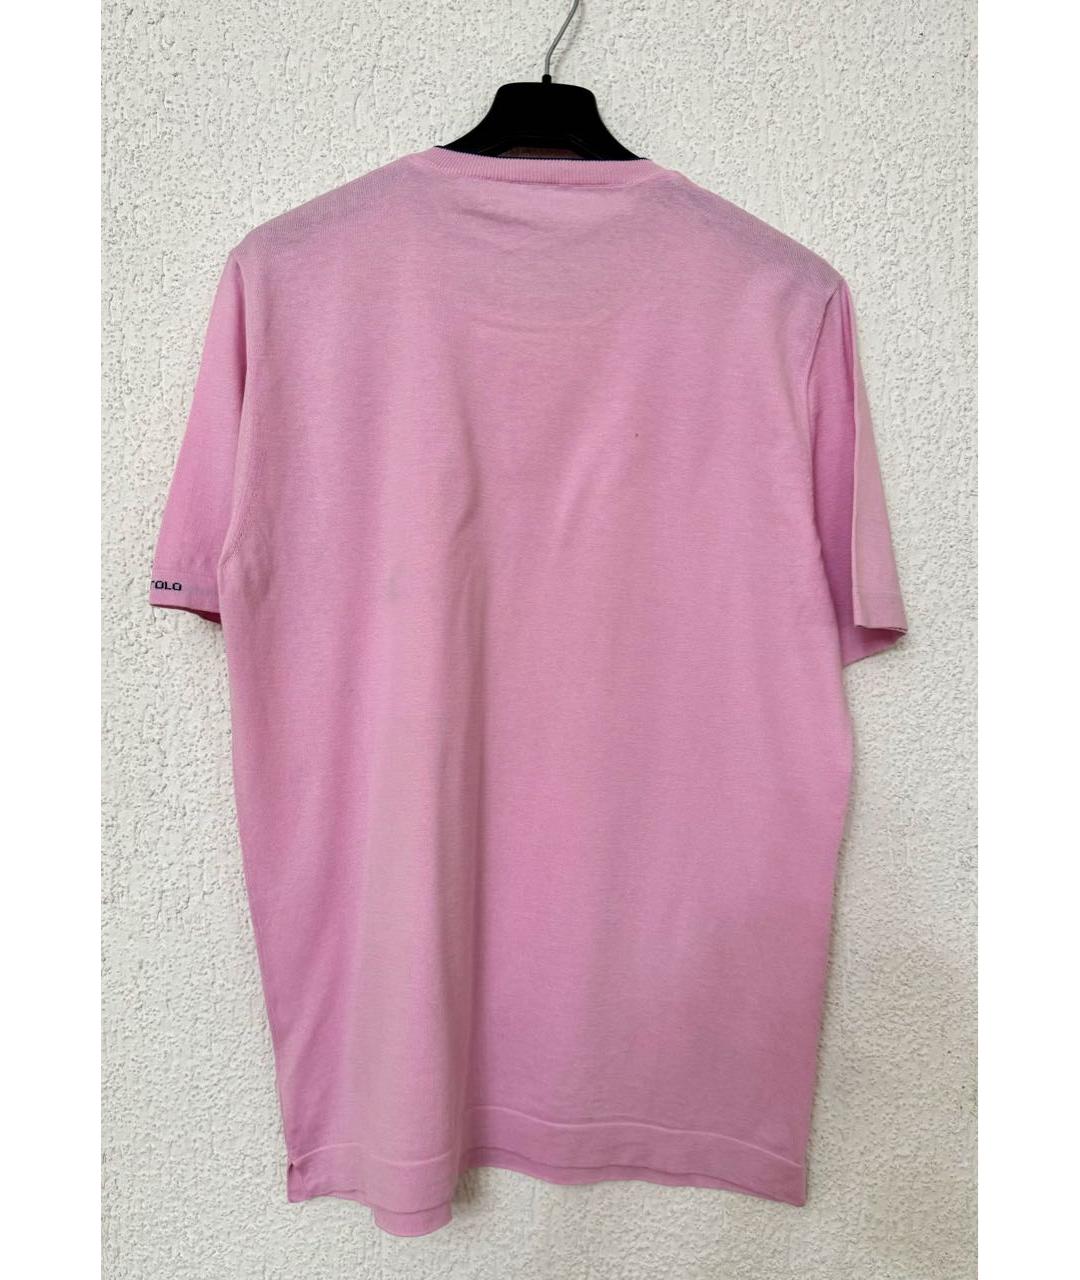 BERTOLO LUXURY MENSWEAR Розовый хлопковый джемпер / свитер, фото 2